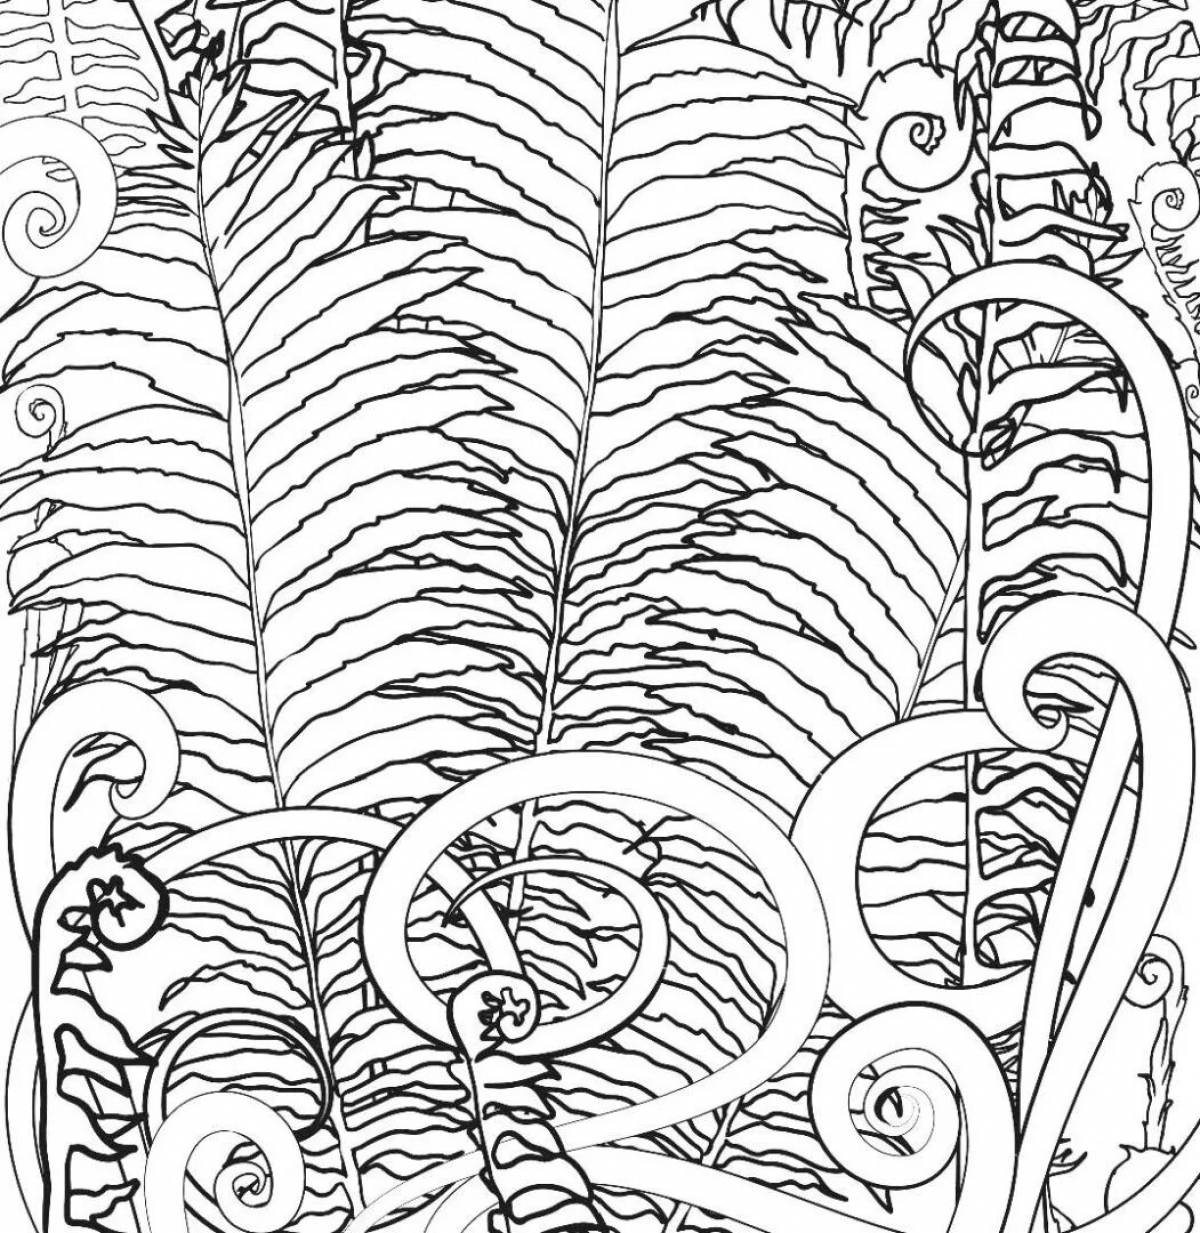 Serendipitous coloring page антистрессовый лес